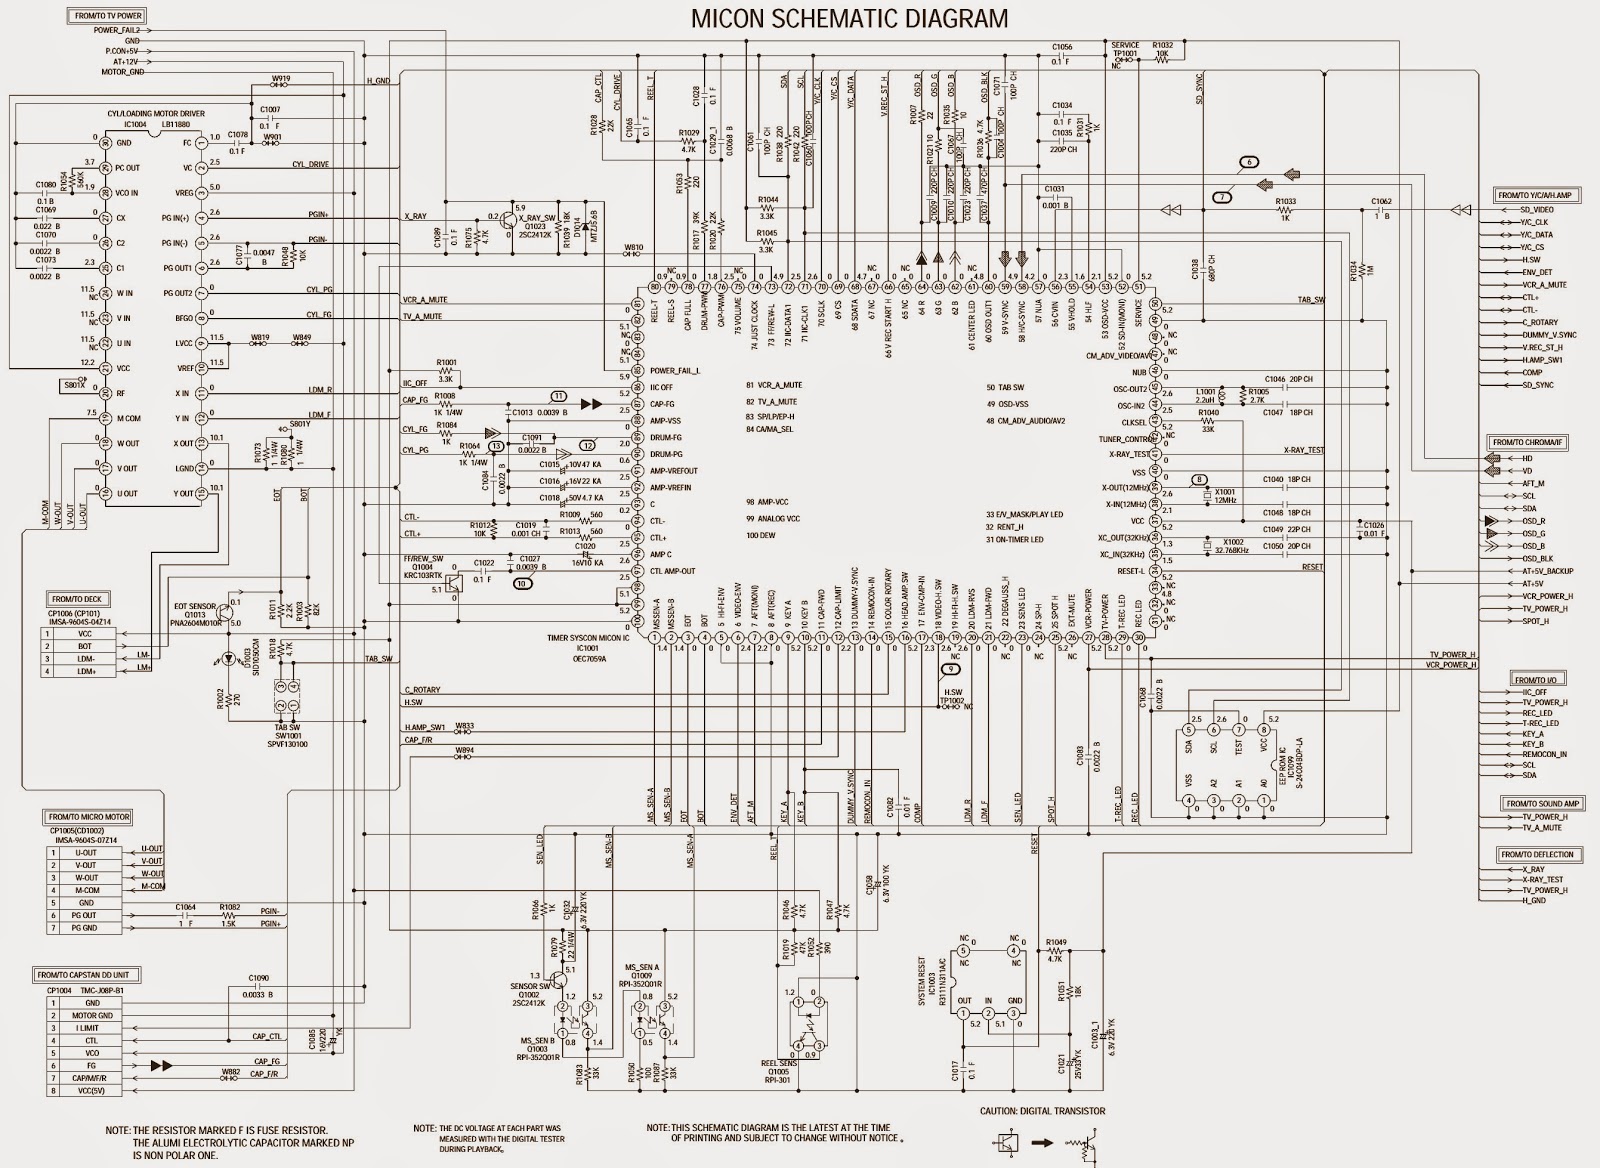 Sony tv schematic diagram